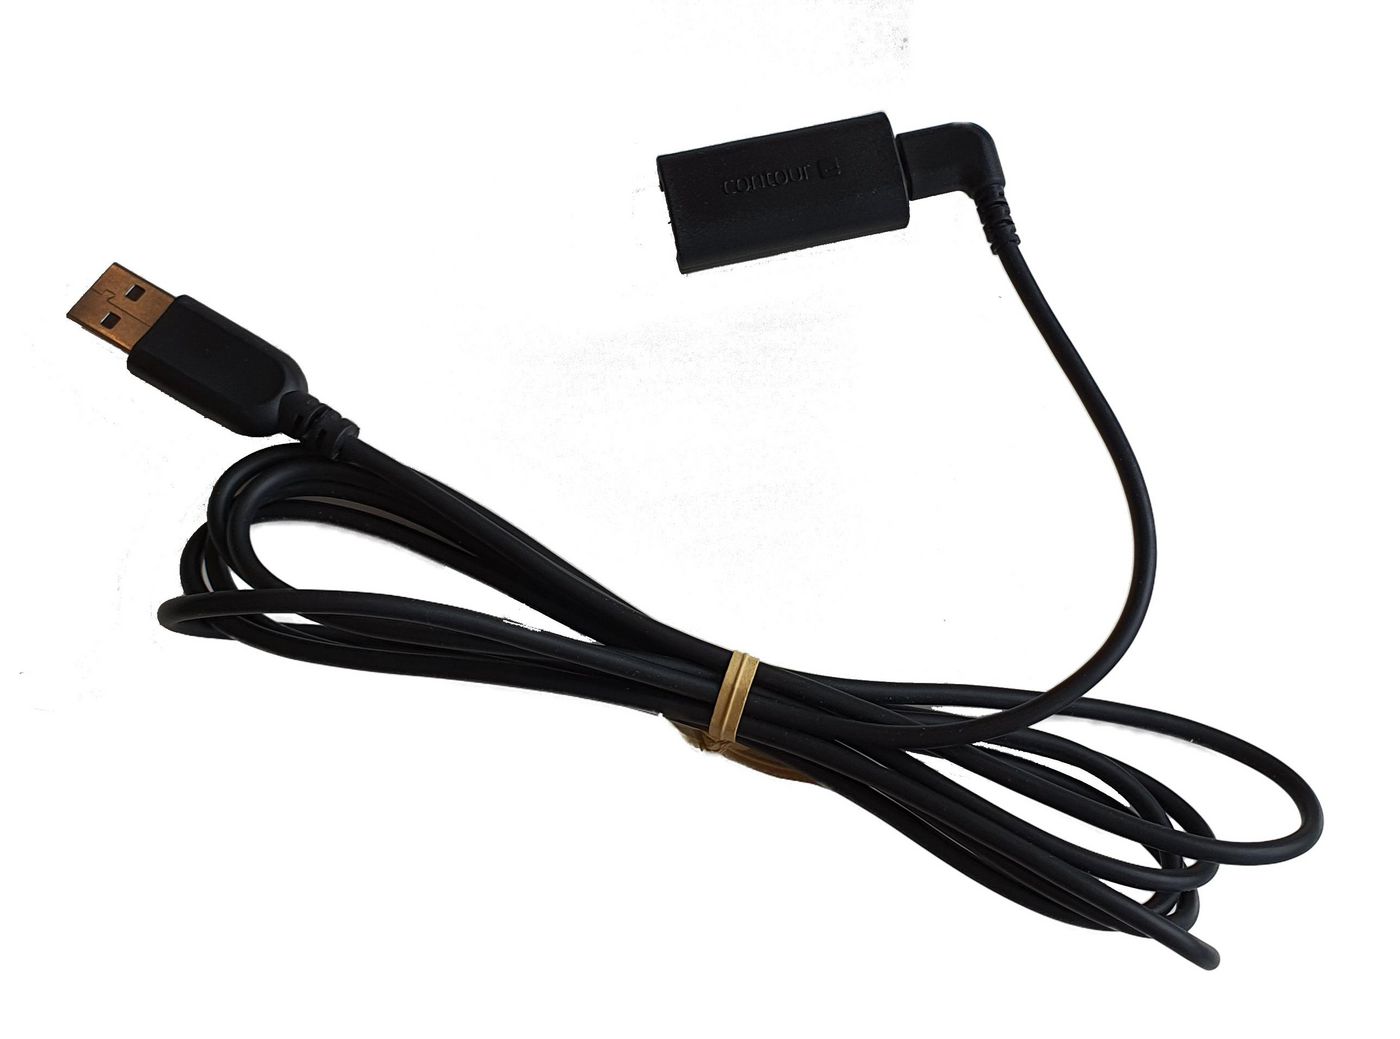 Contour MICRO-USB-CBL Micro USB Cable **New Retail** 